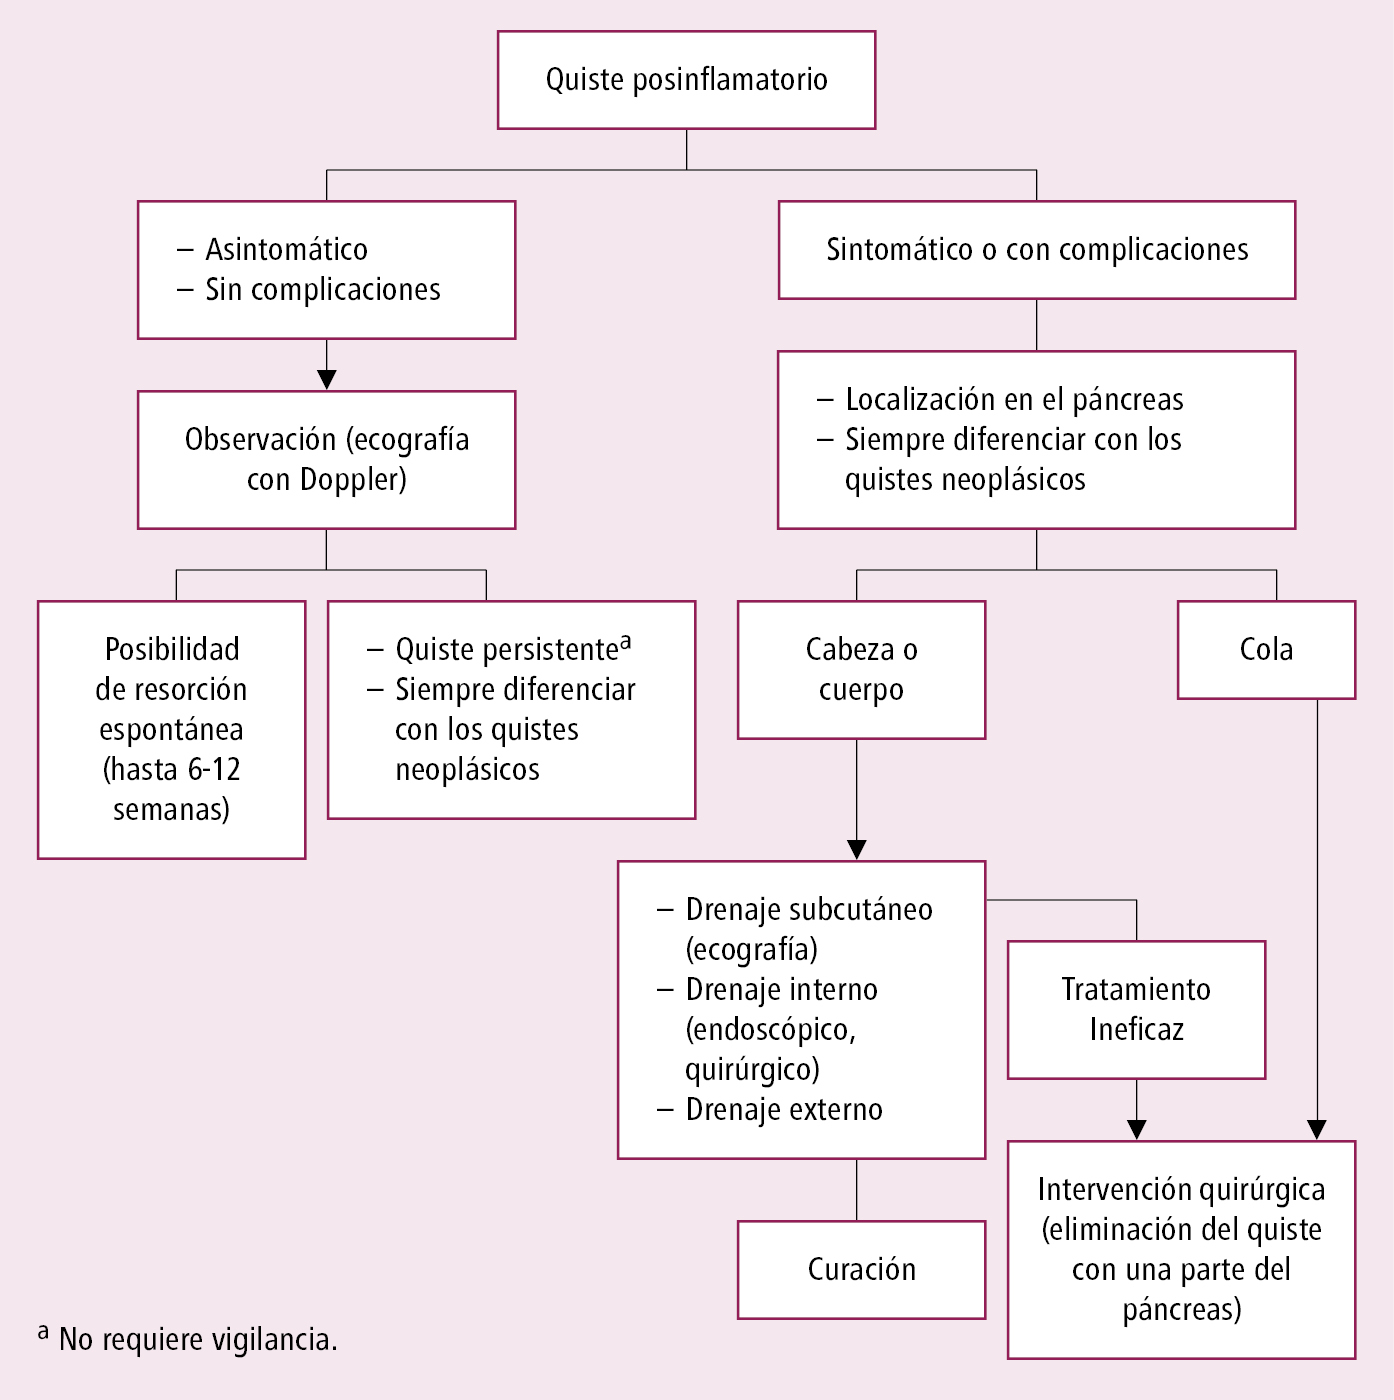    Fig. 5.3-2.  Algoritmo de tratamiento de quistes pancreáticos posinflamatorios 